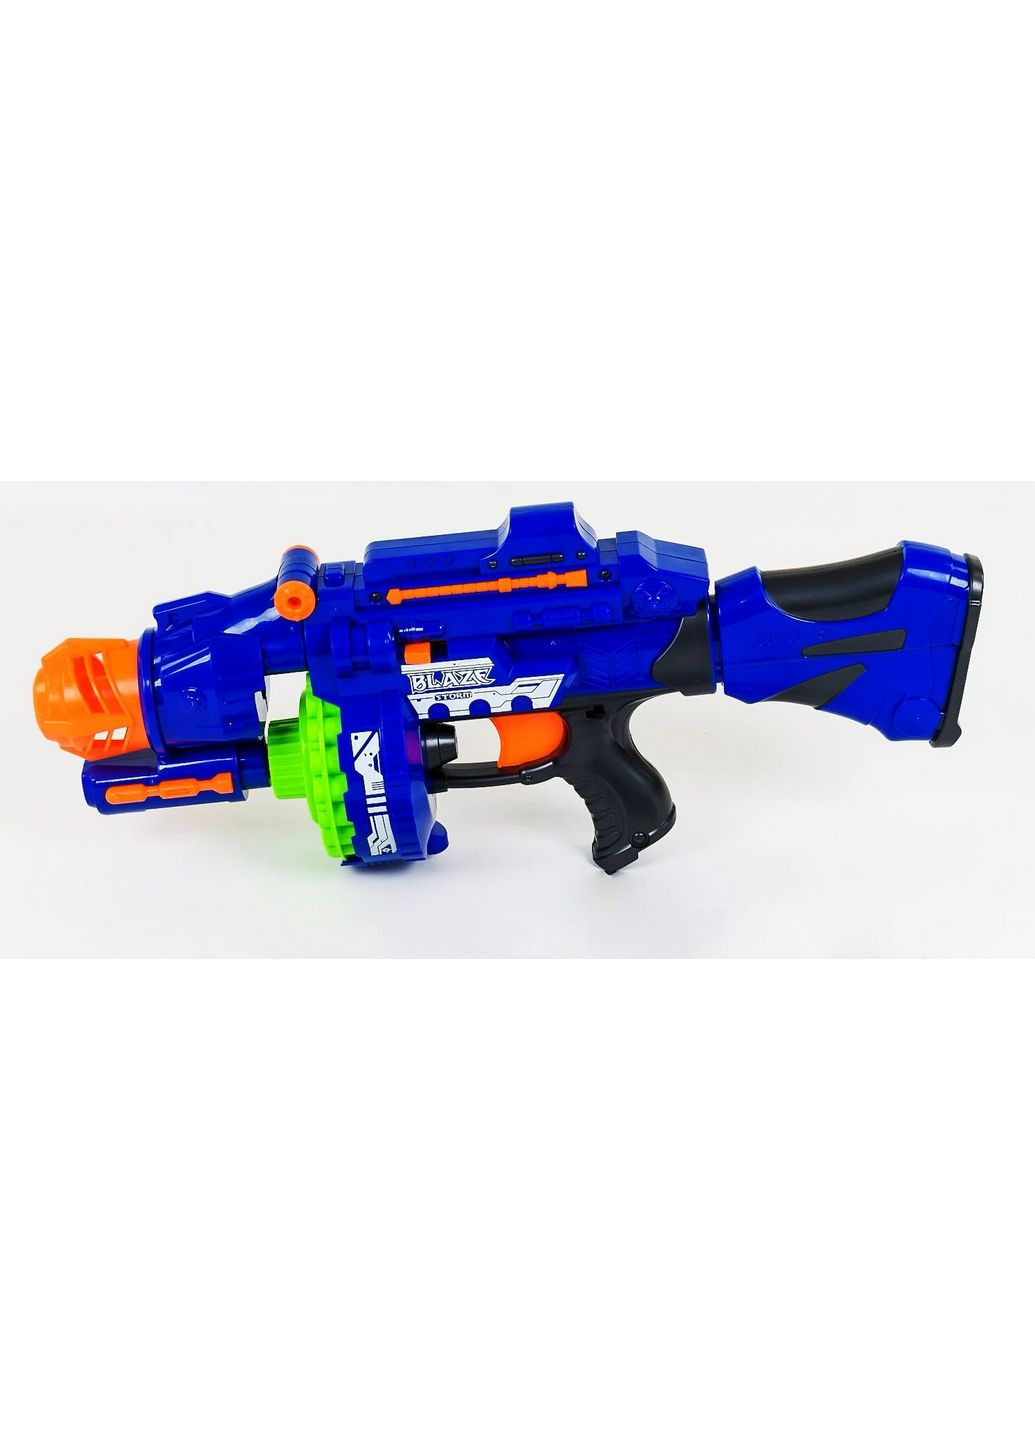 Пулемет-бластер "Blaze Storm" 56х25х14 см Zecong Toys (289365691)